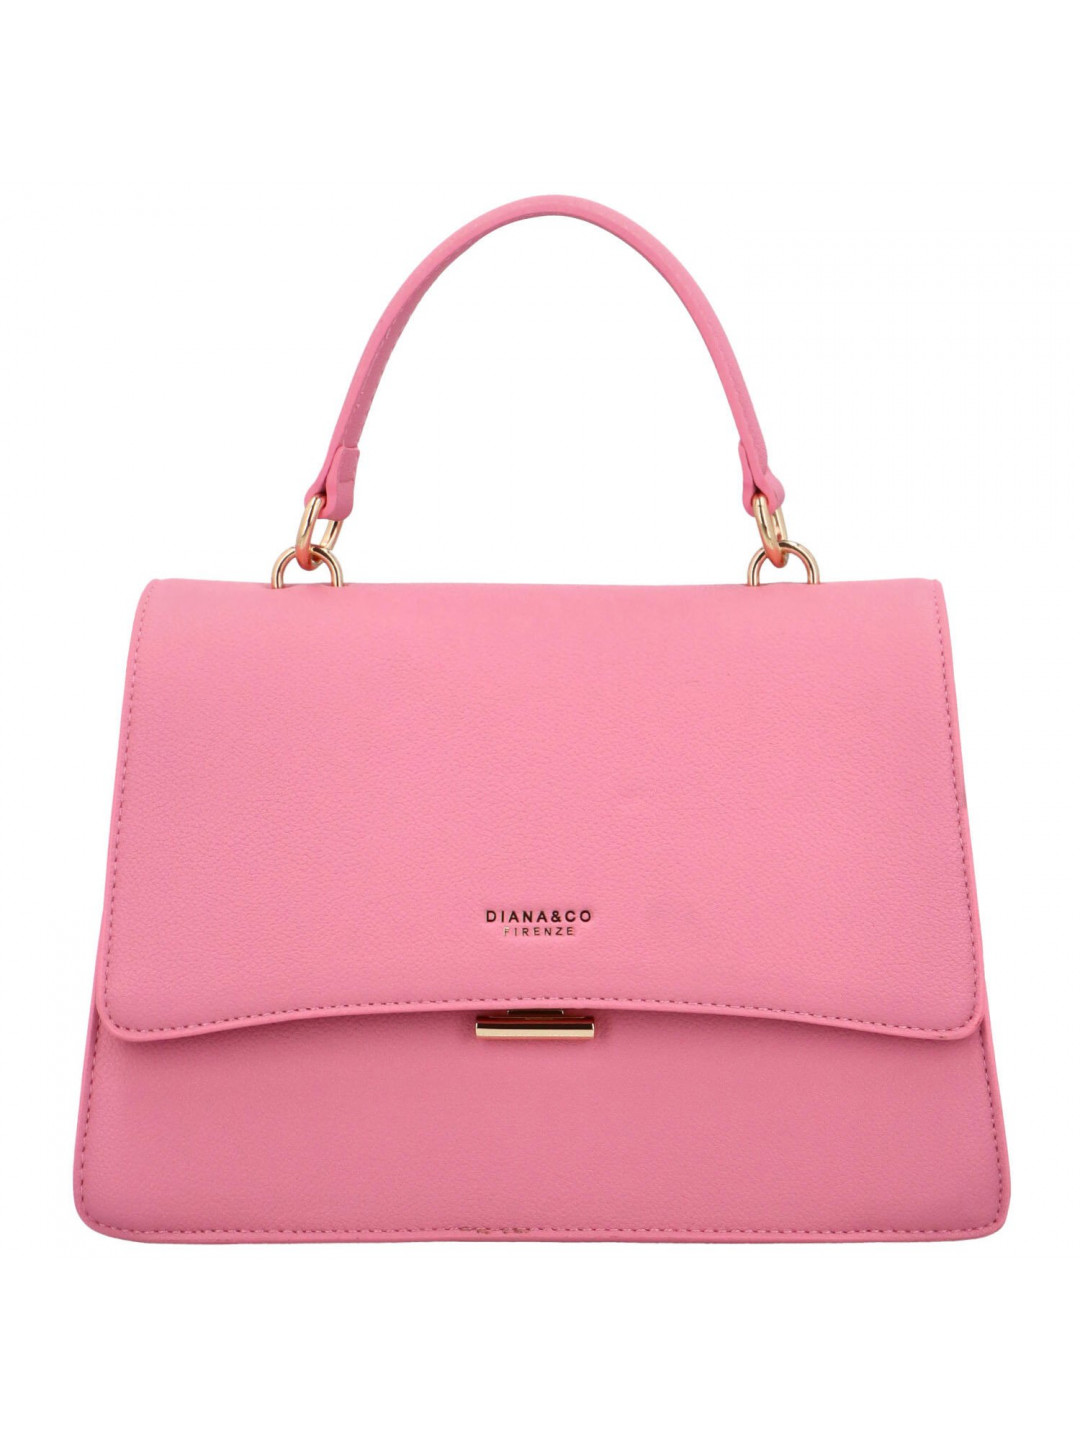 Luxusní kabelka do ruky Lossie barbie růžová